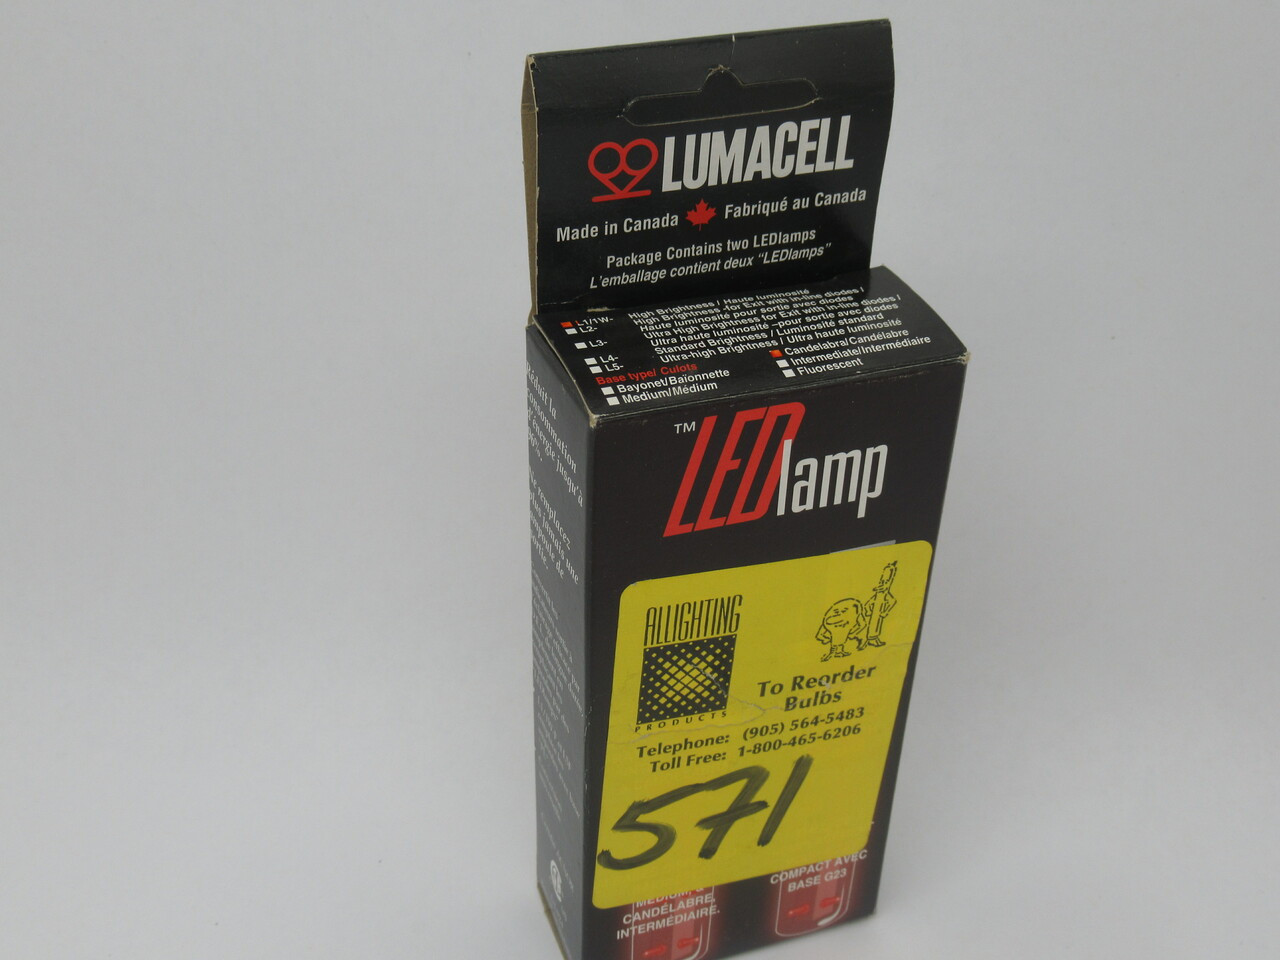 Lumacell L1/1W-C LED Lamp for Exit Sign 0.8W 120VAC 60Hz 2-Pk *Damaged Box* NEW